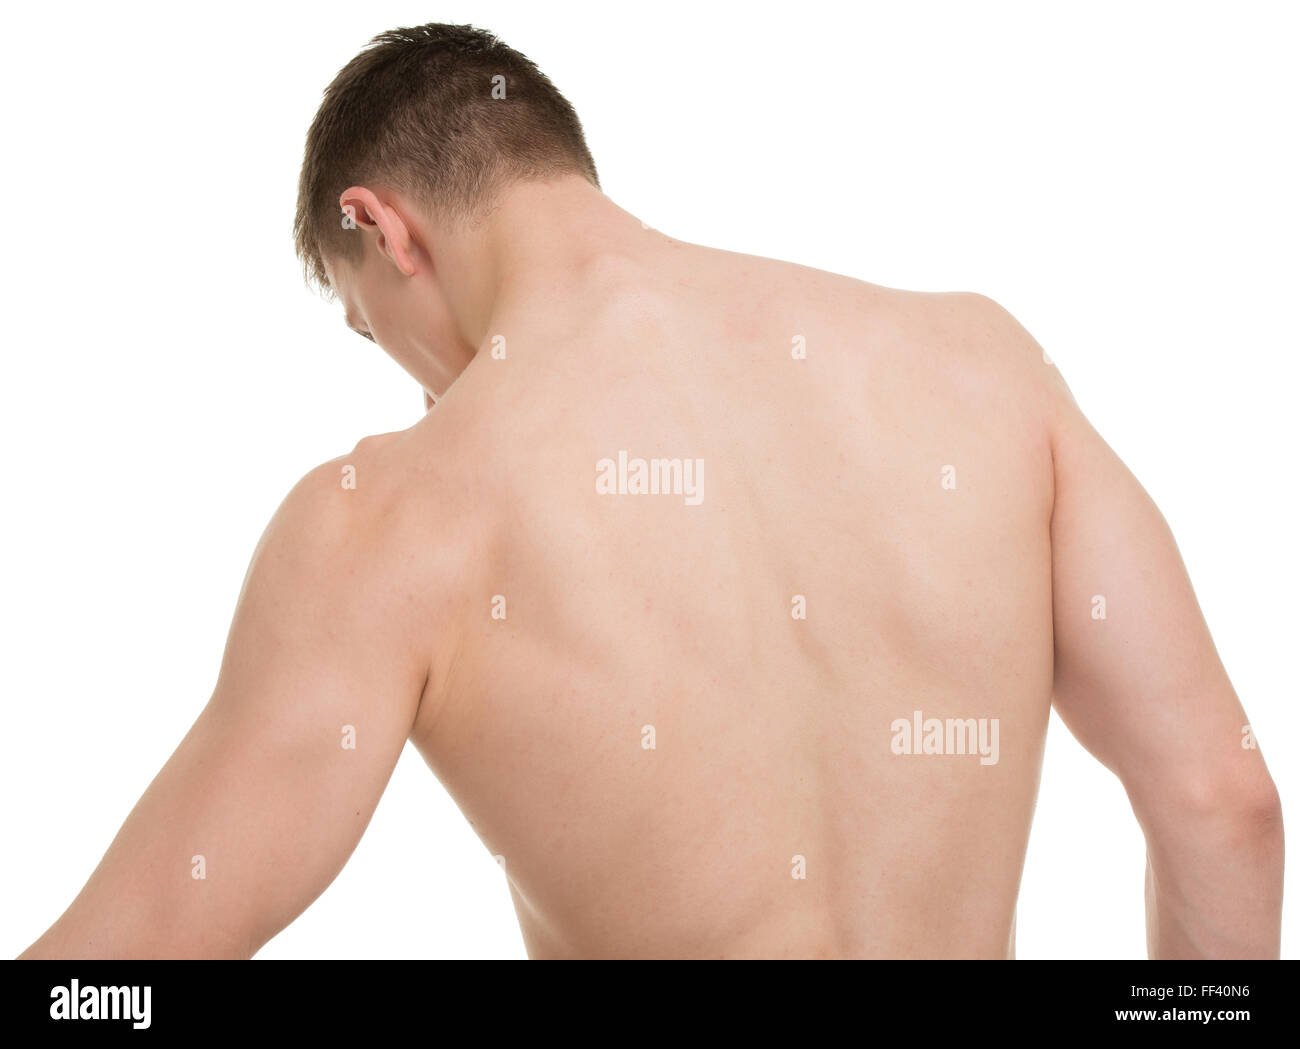 Male Back Body Fitness Anatomy concept Stock Photo